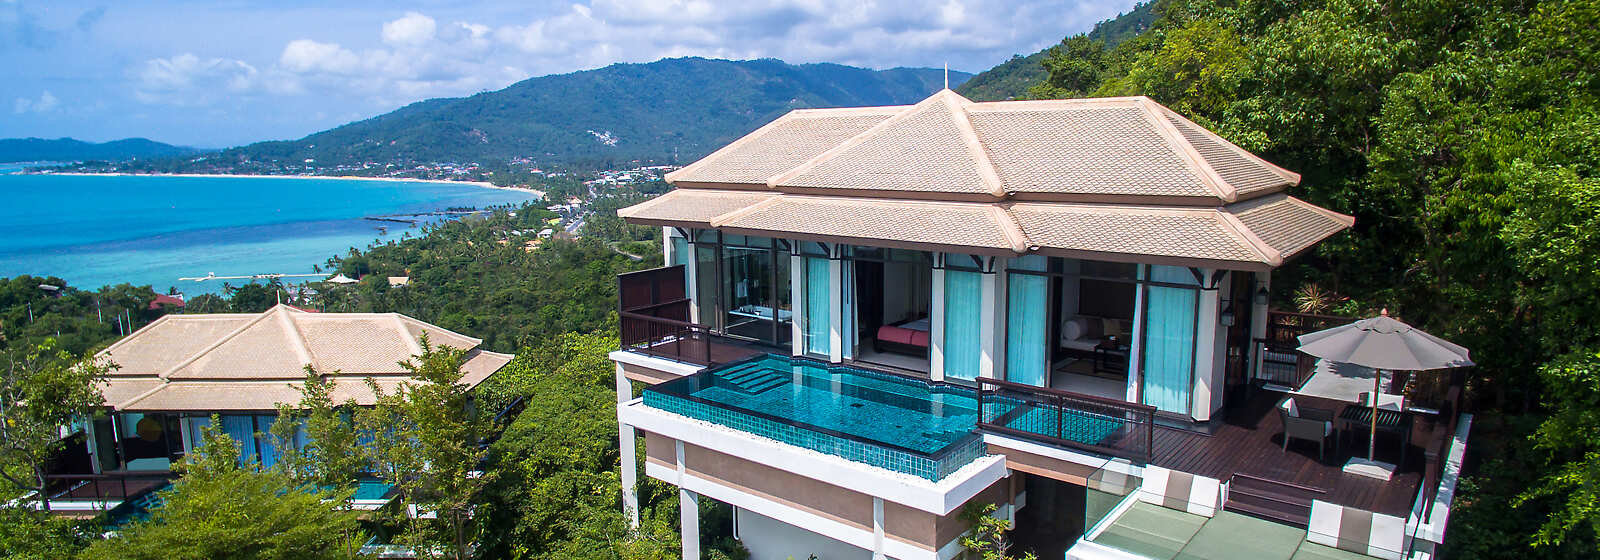 Horizon Hillcrest Pool Villa, Banyan Tree Samui, Thailand